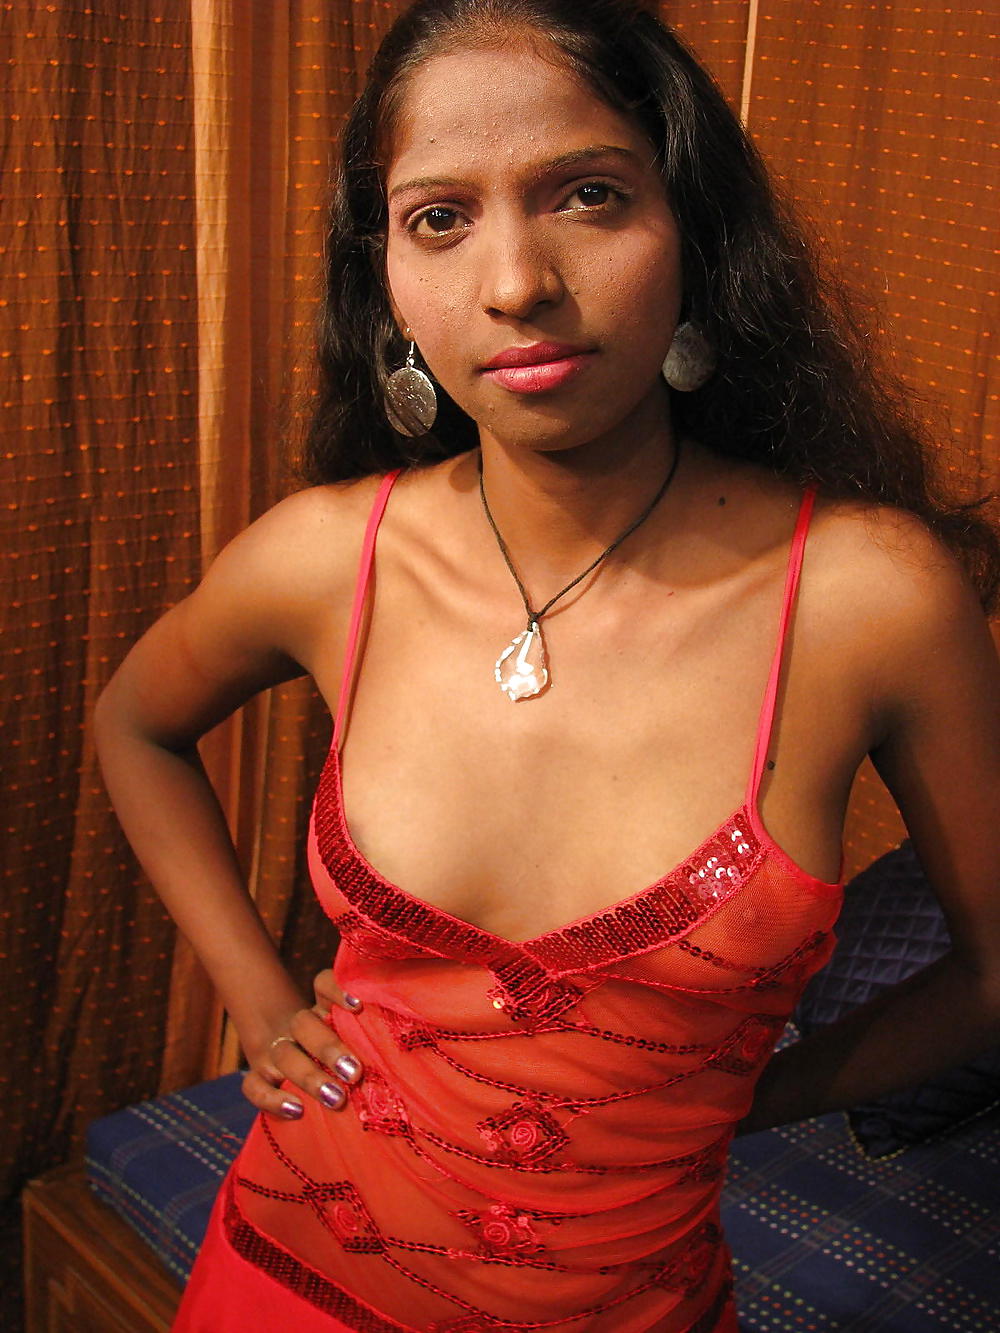 Desi Bala Chaud Et Sexy - Hardcore Indien #24978254